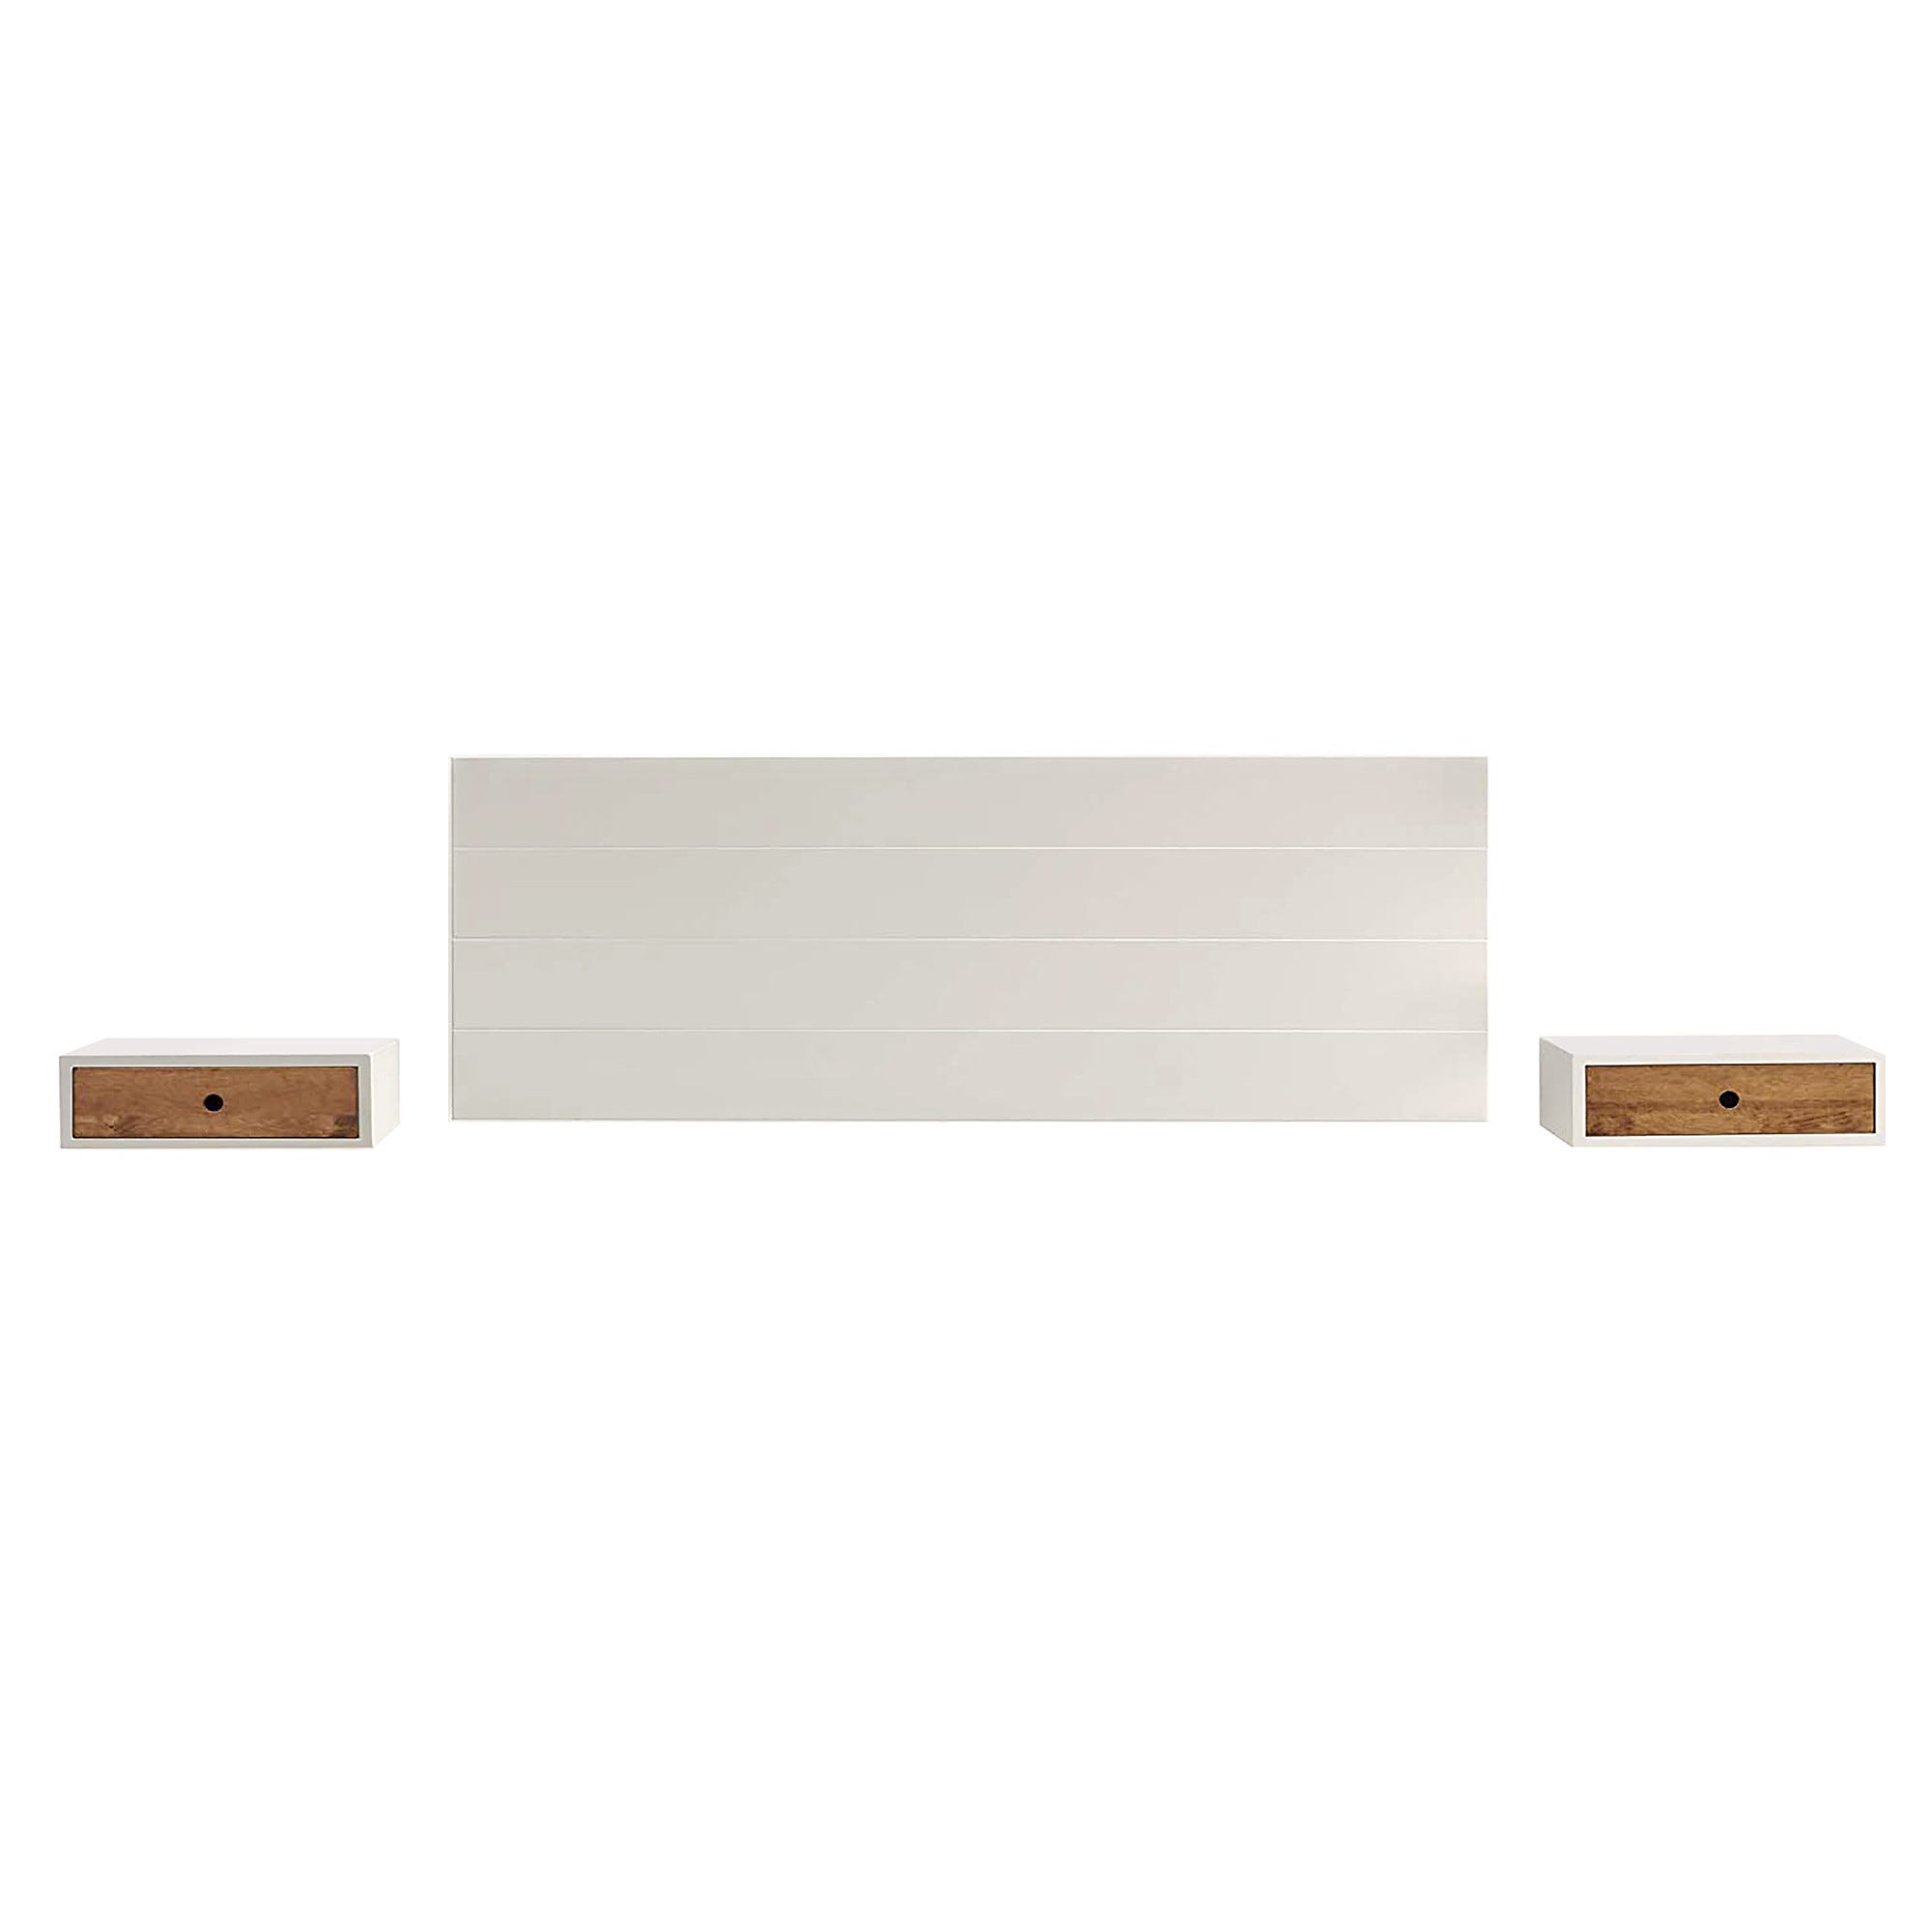 Cabecero madera natural + 2 mesitas flotantes color blanco, Frente cajon  madera maciza natural